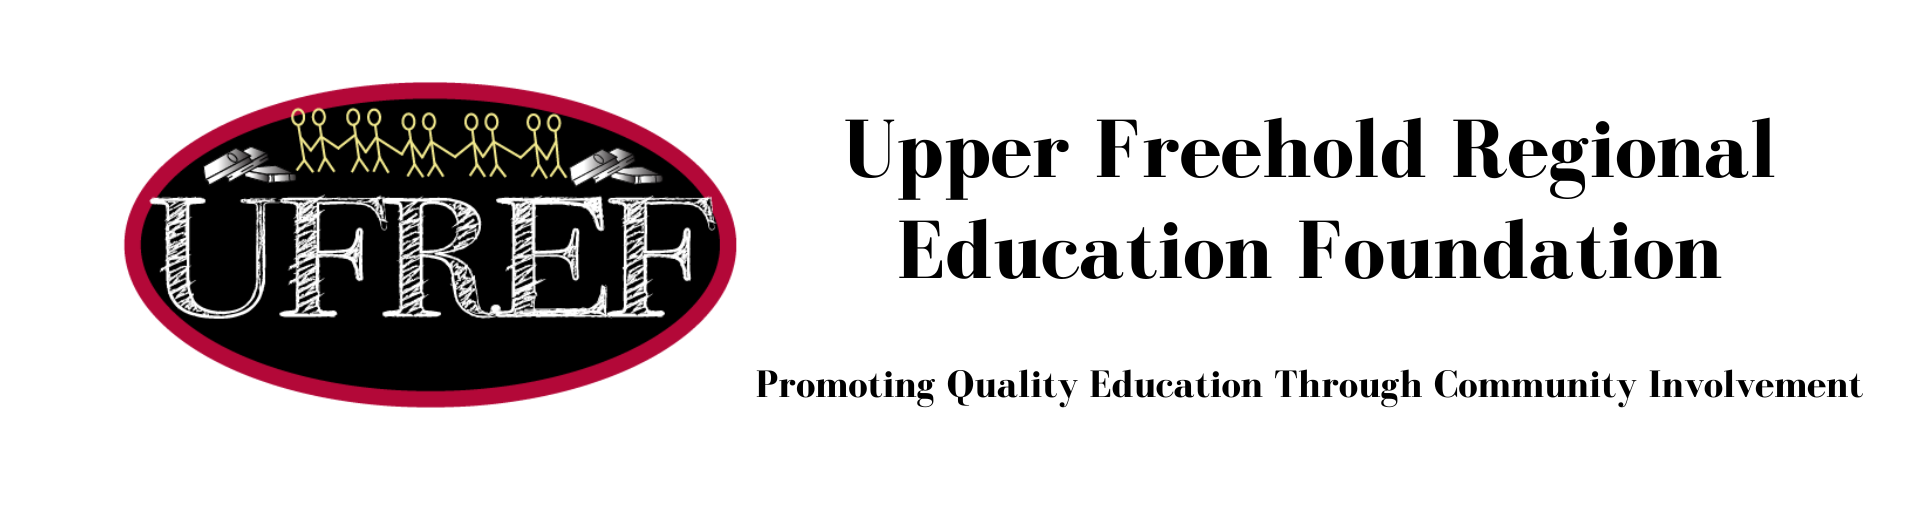 Upper Freehold Regional Education Foundation